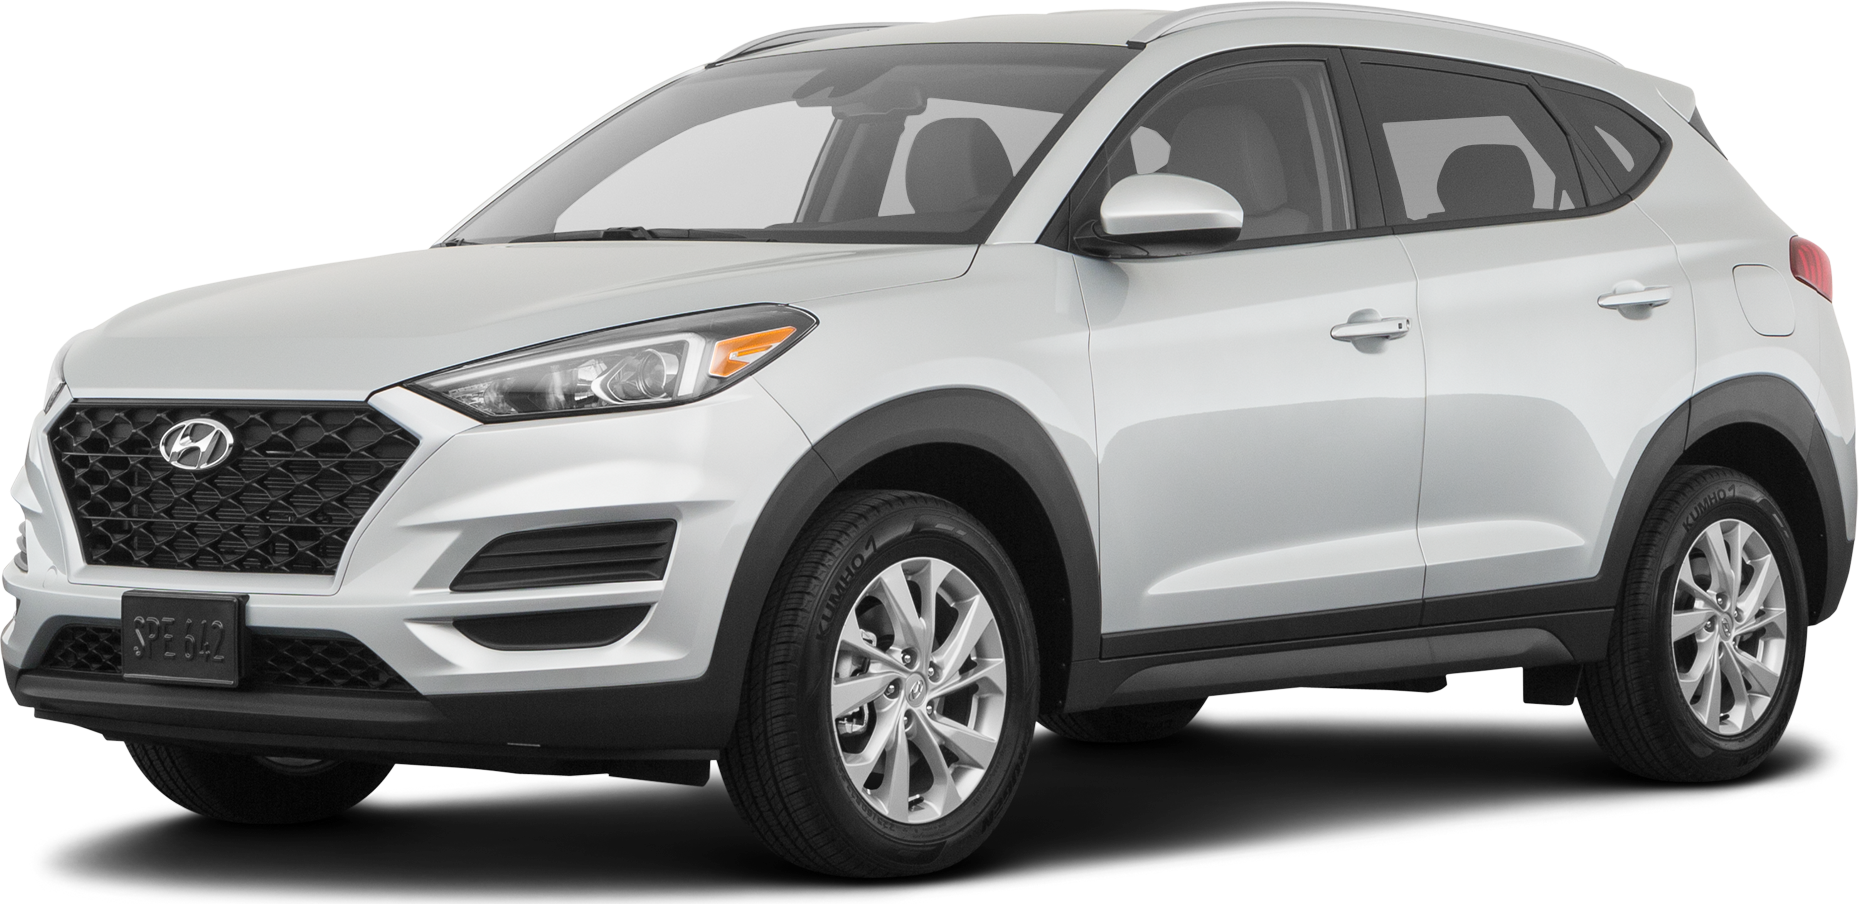 2019 Hyundai Tucson Values & Cars for | Kelley Blue Book